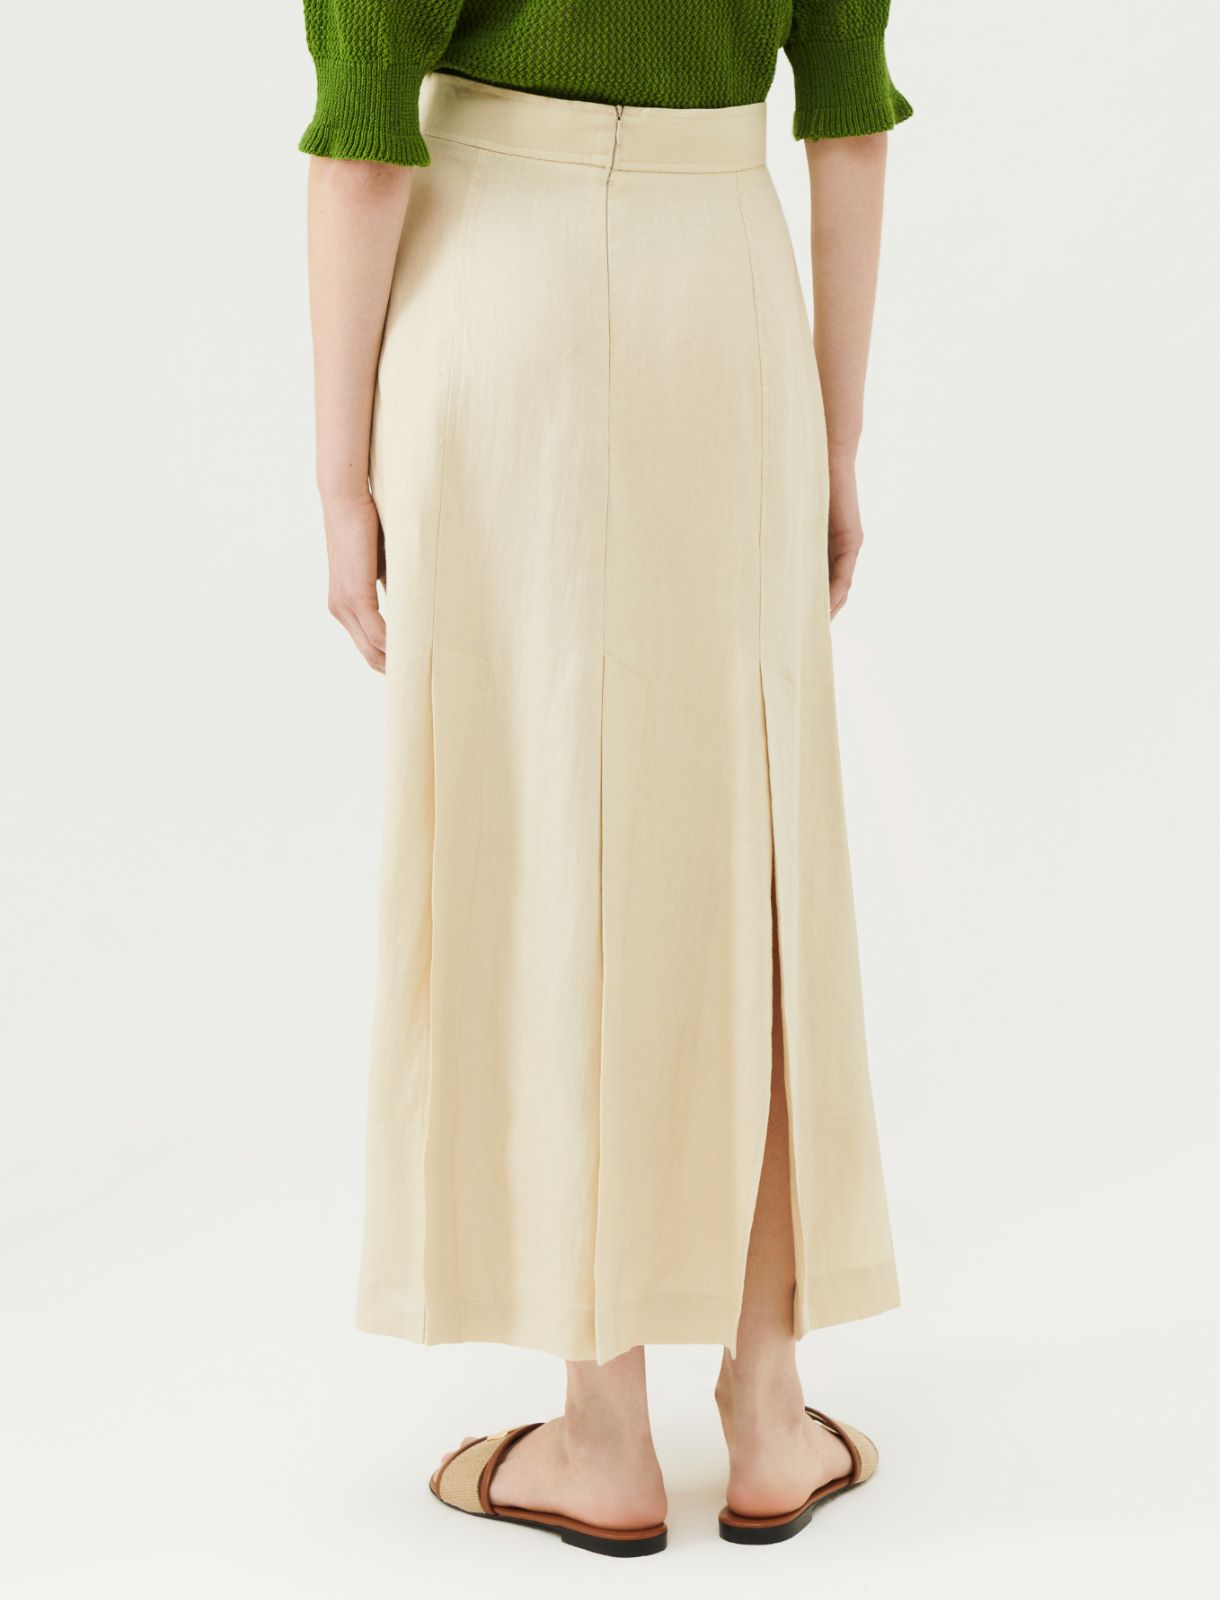 Linen skirt - Sand - Marina Rinaldi - 2